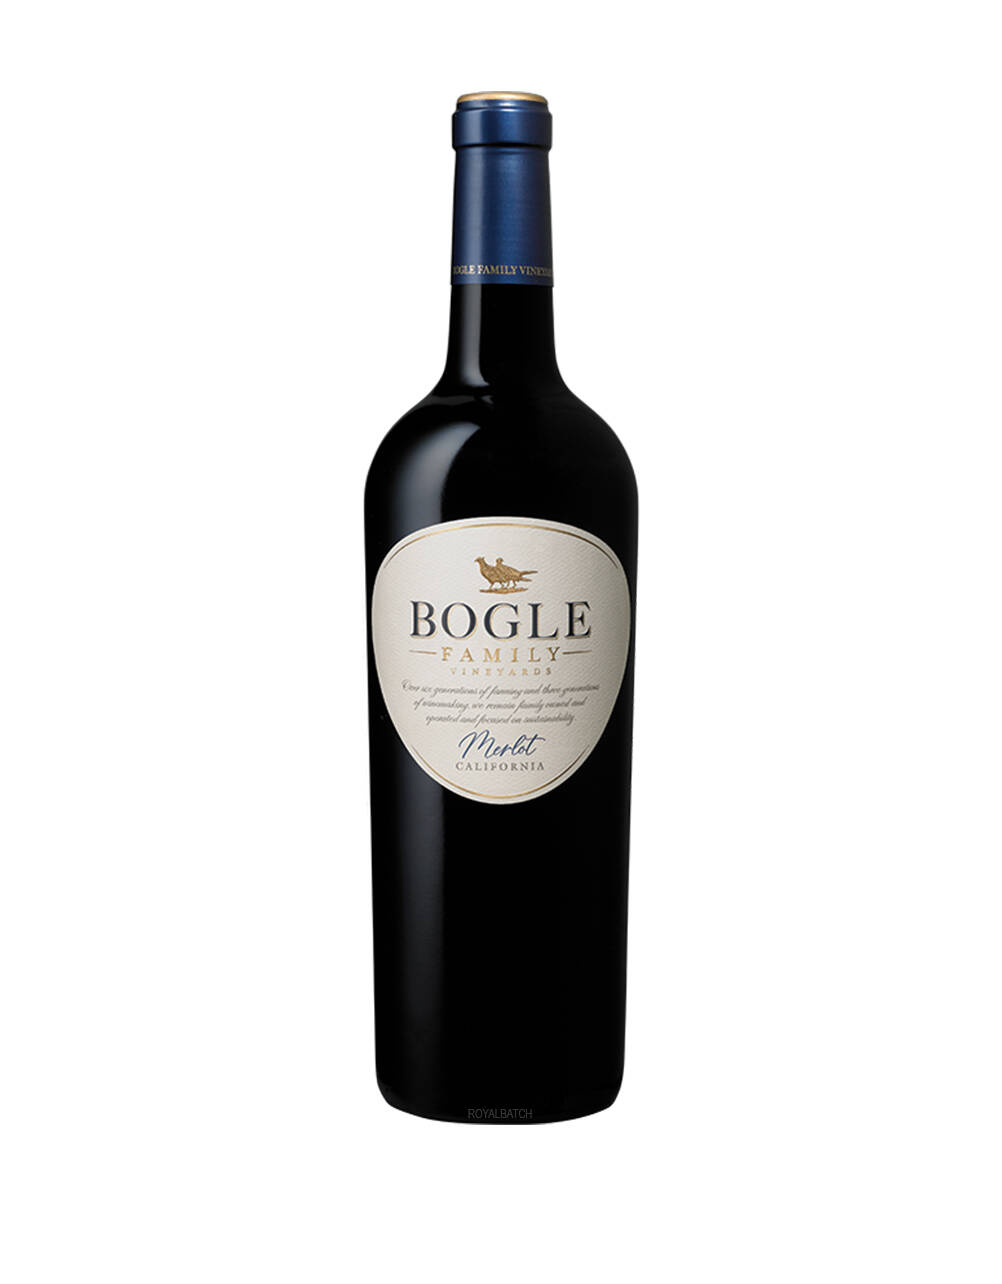 Bogle Family Vineyards California Merlot Wine